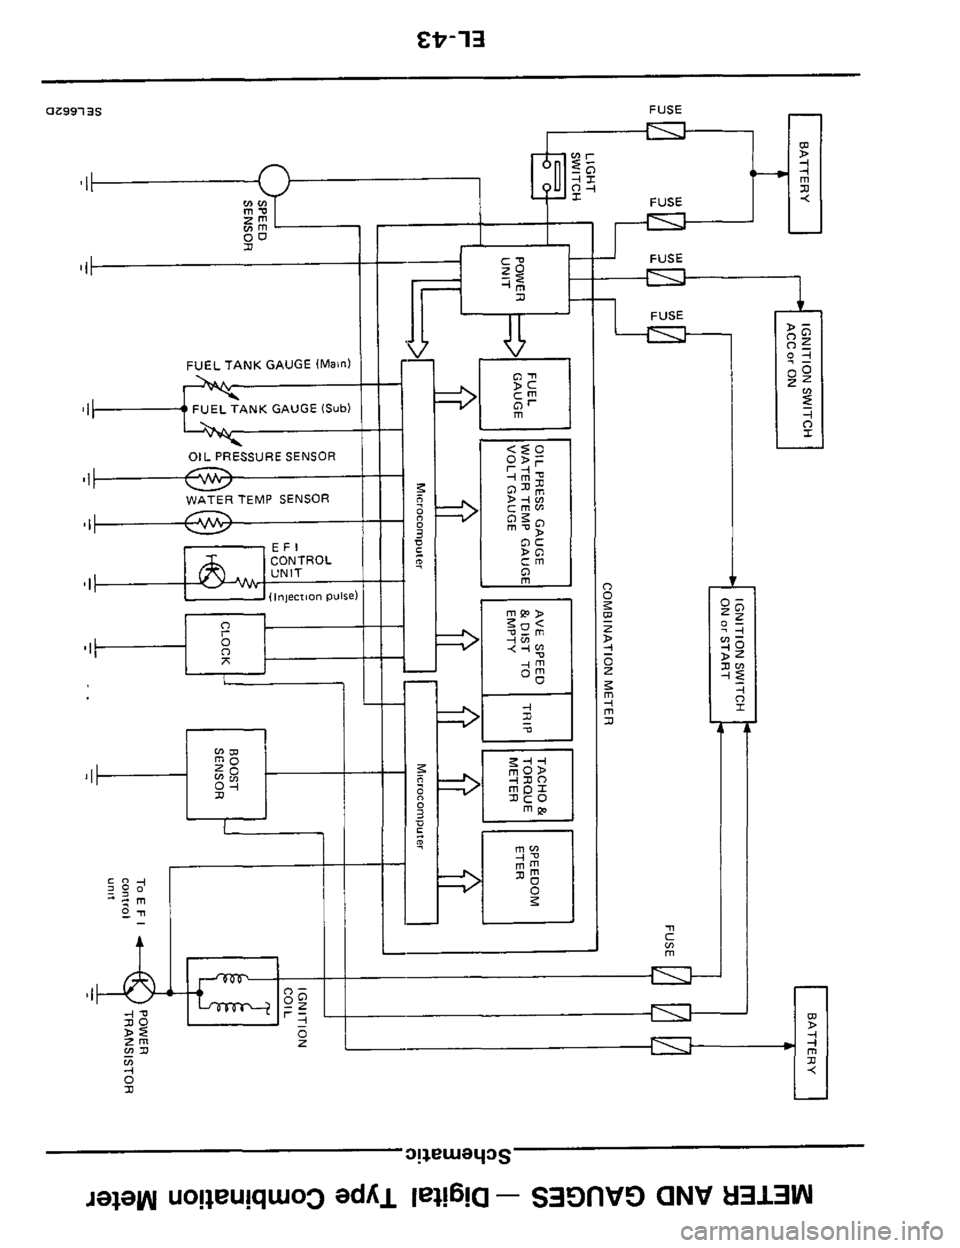 NISSAN 300ZX 1984 Z31 Electrical System Service Manual FUEL TANK  GAUGE (Main1 
I 
SI 
01 
74 
I -0 I 
A FUSE 
__Izt___l  